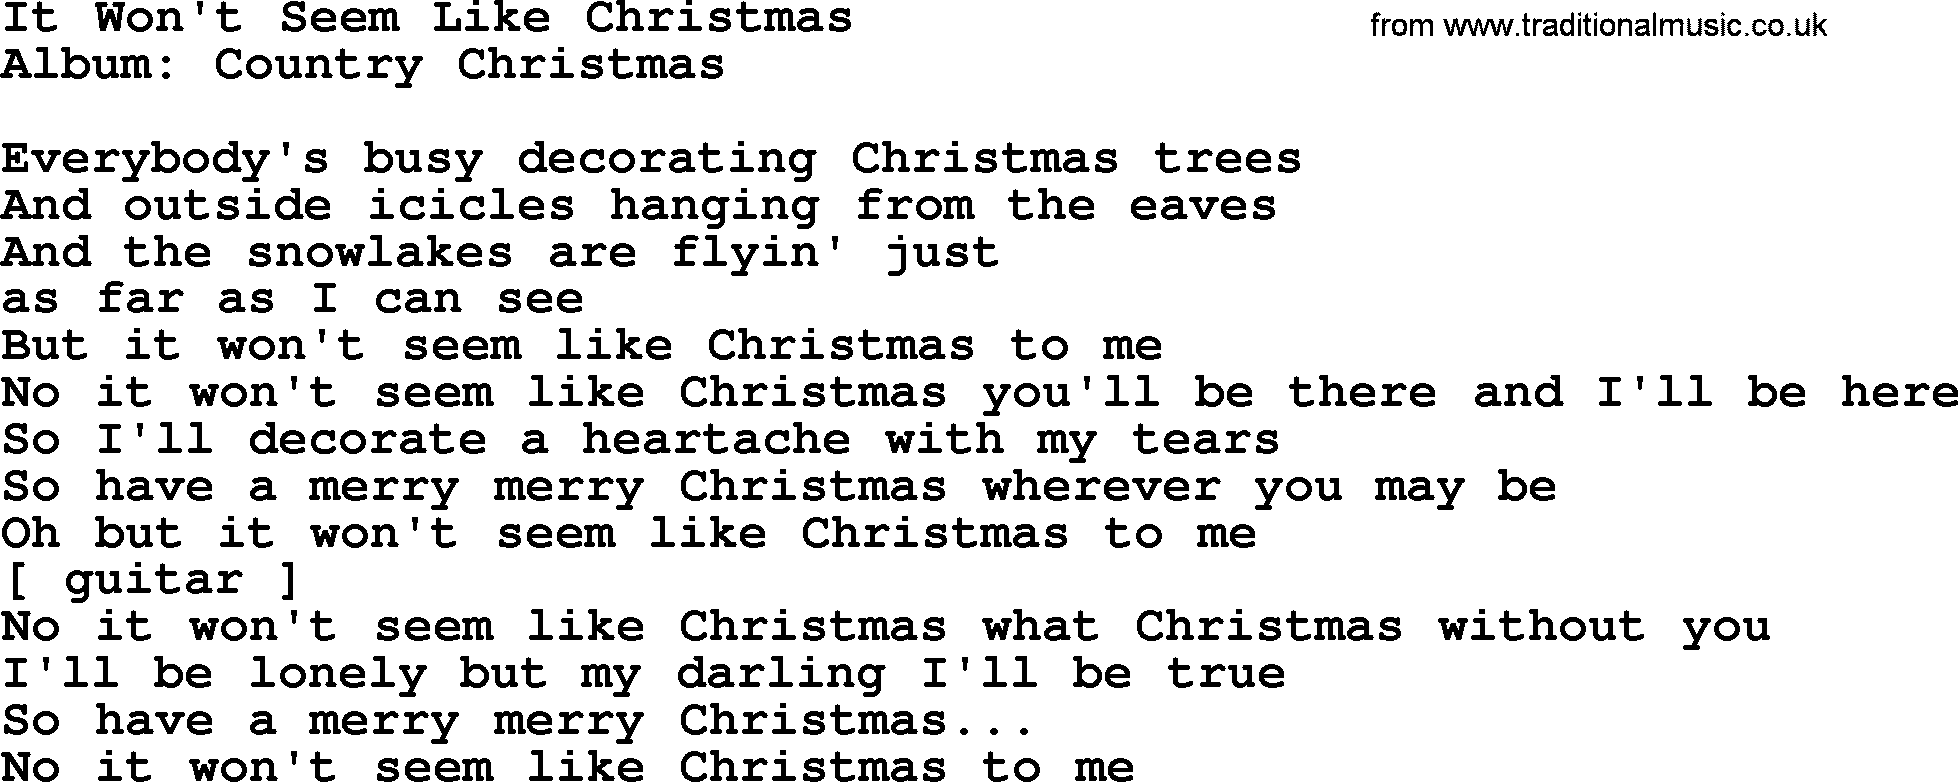 Loretta Lynn song: It Won't Seem Like Christmas lyrics